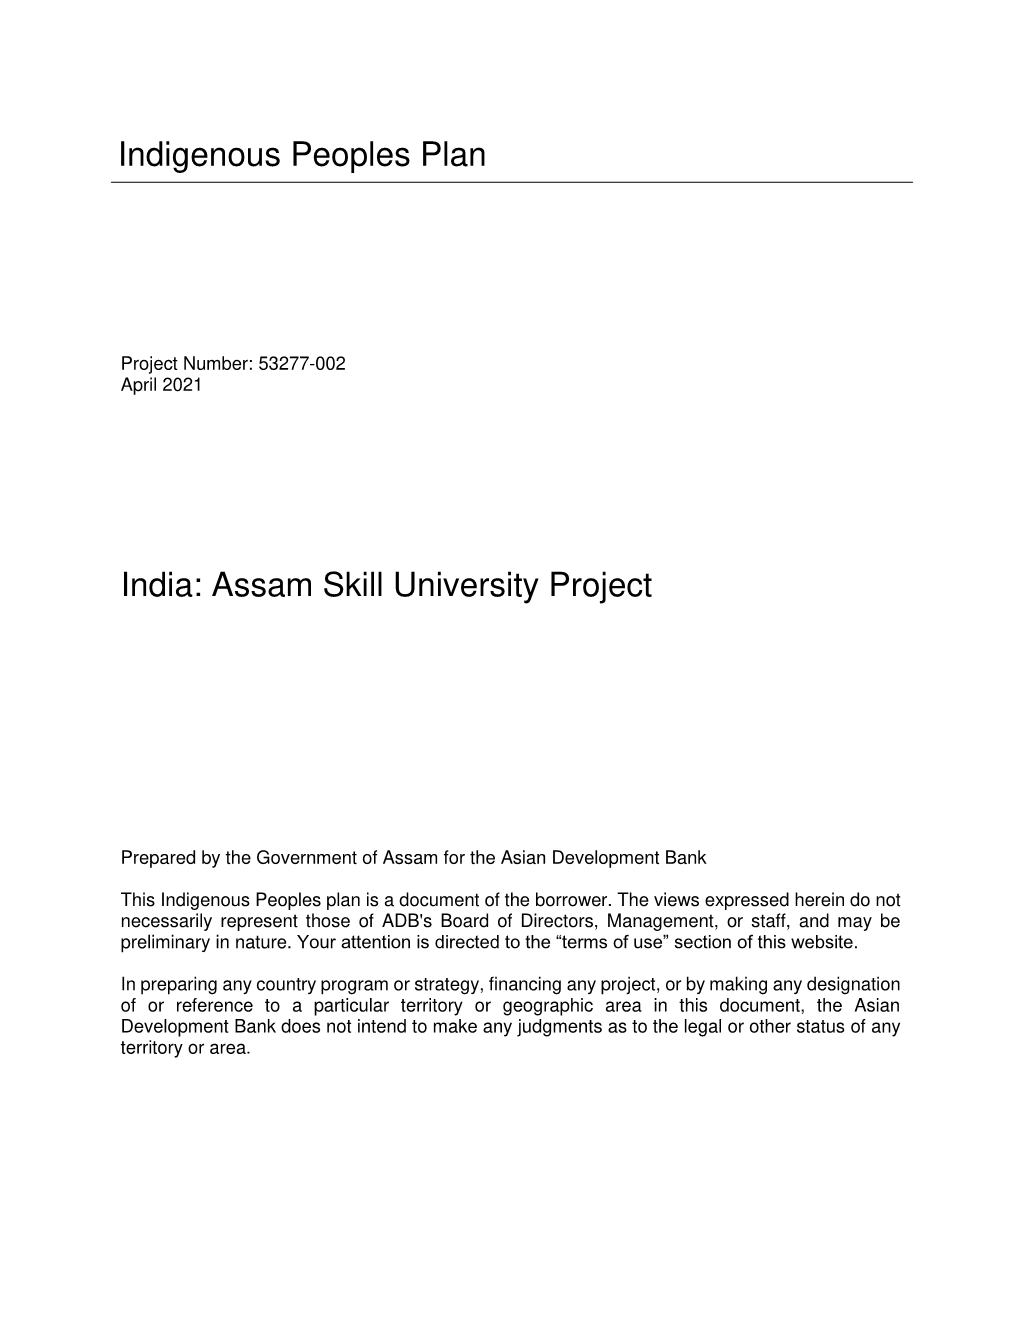 53277-002: Assam Skill University Project